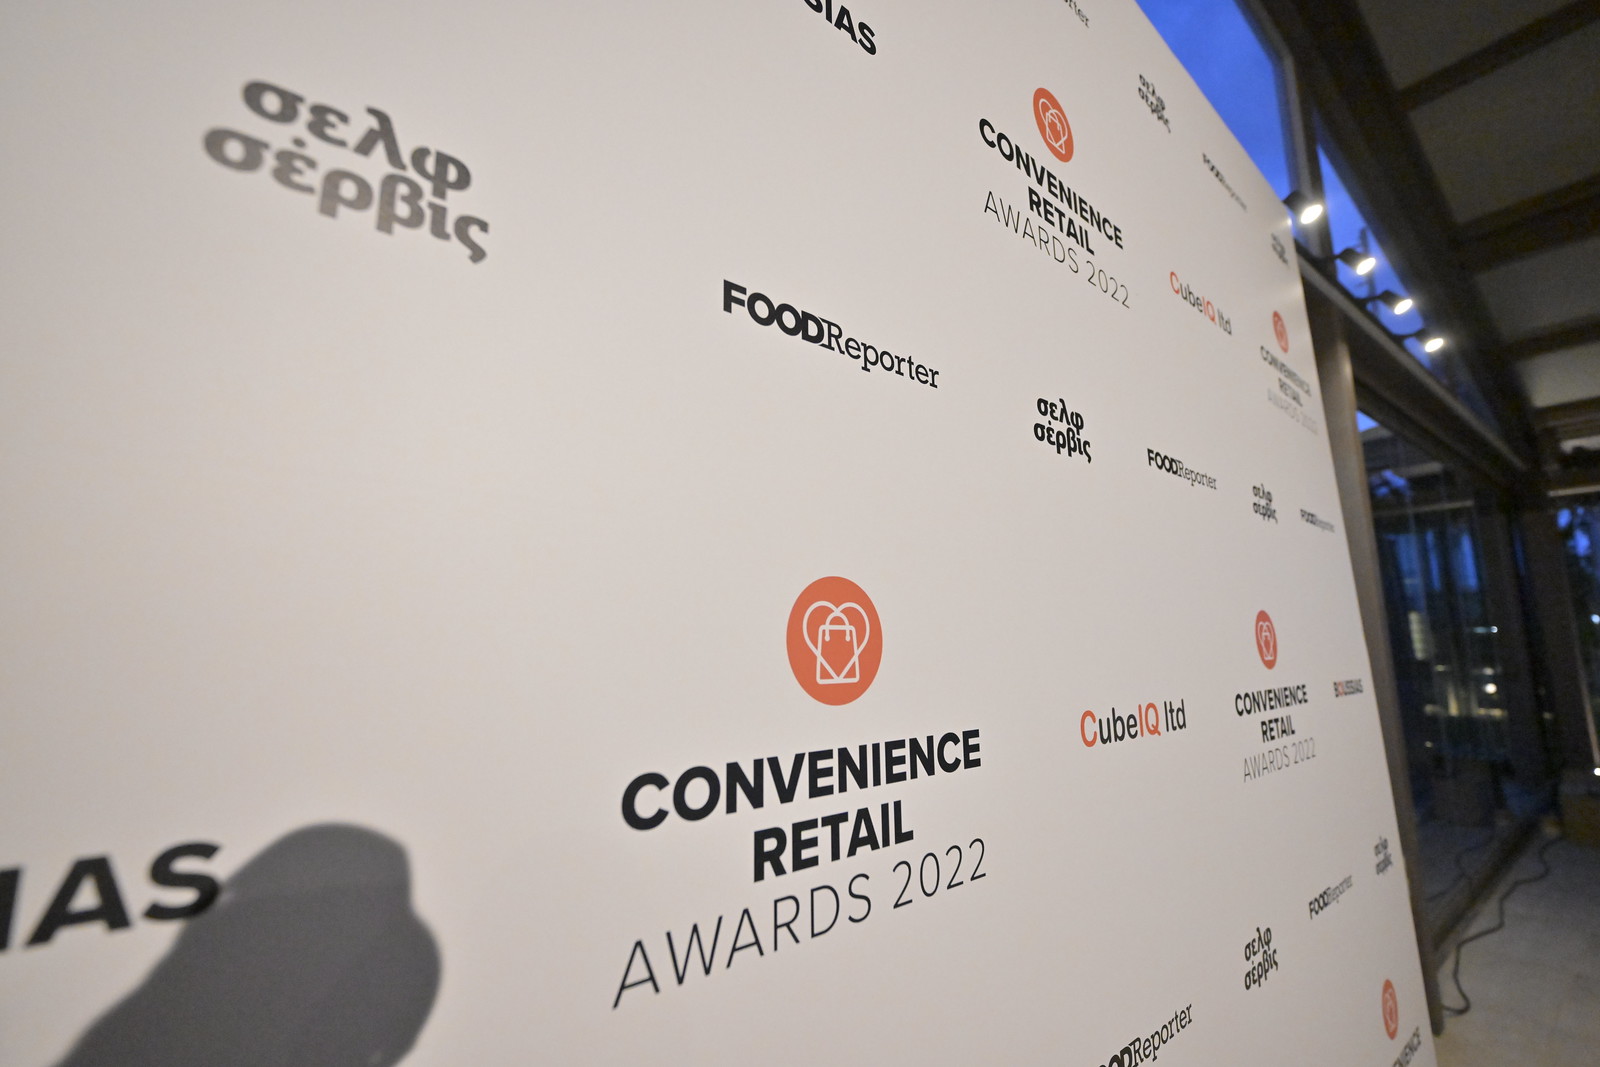 Convenience Retail Awards 2022